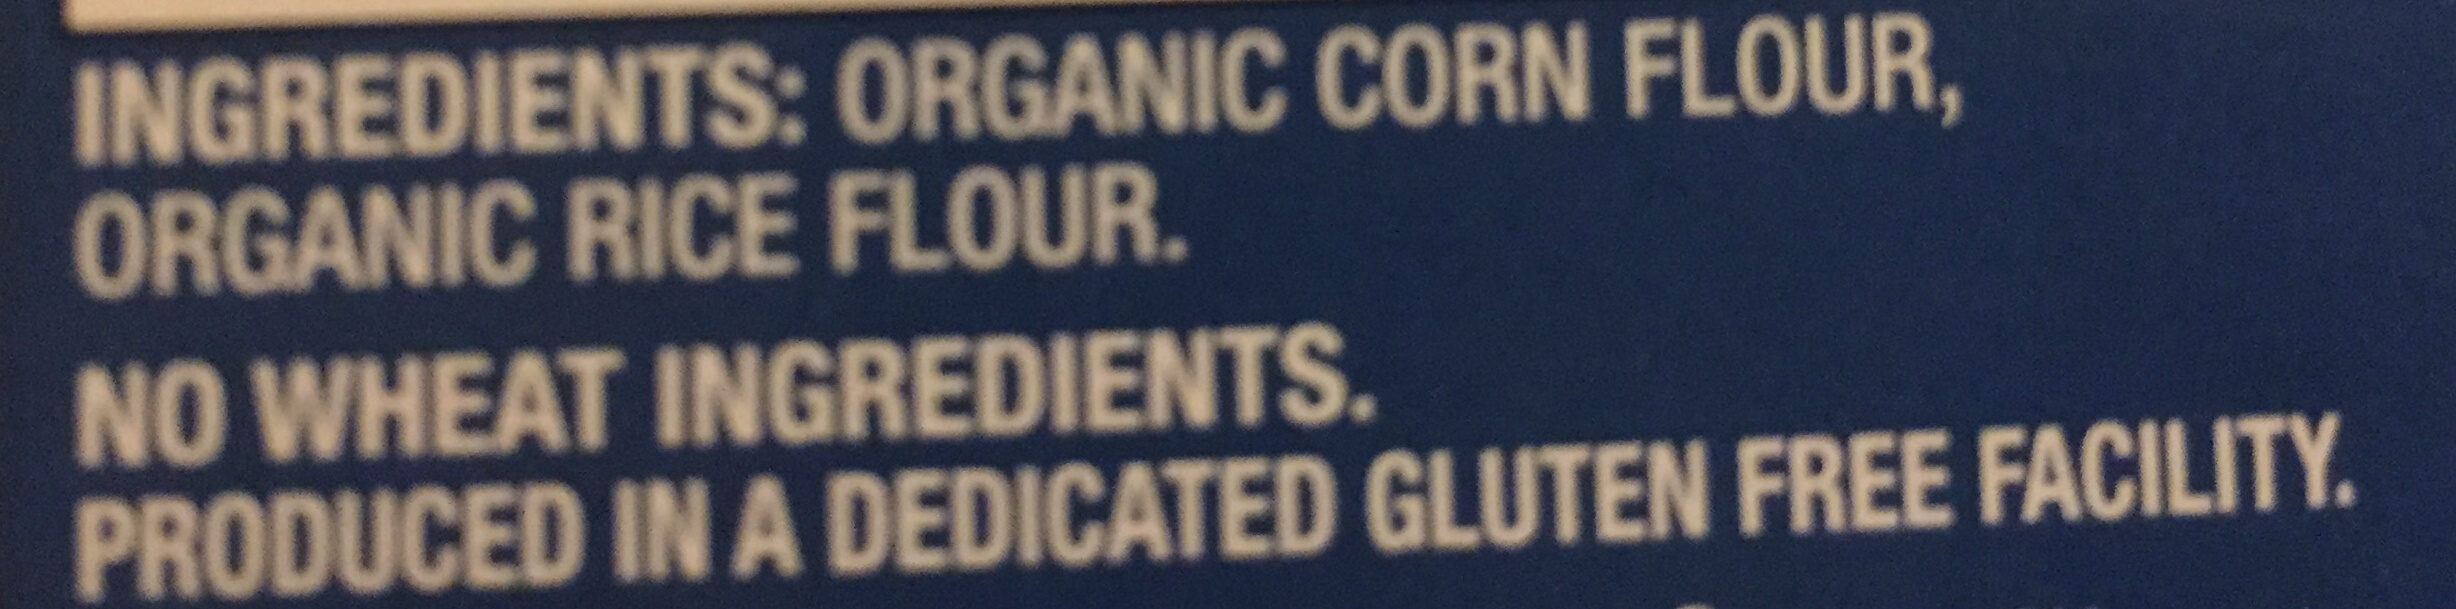 Gluten free organic penne rigate - Ingredients